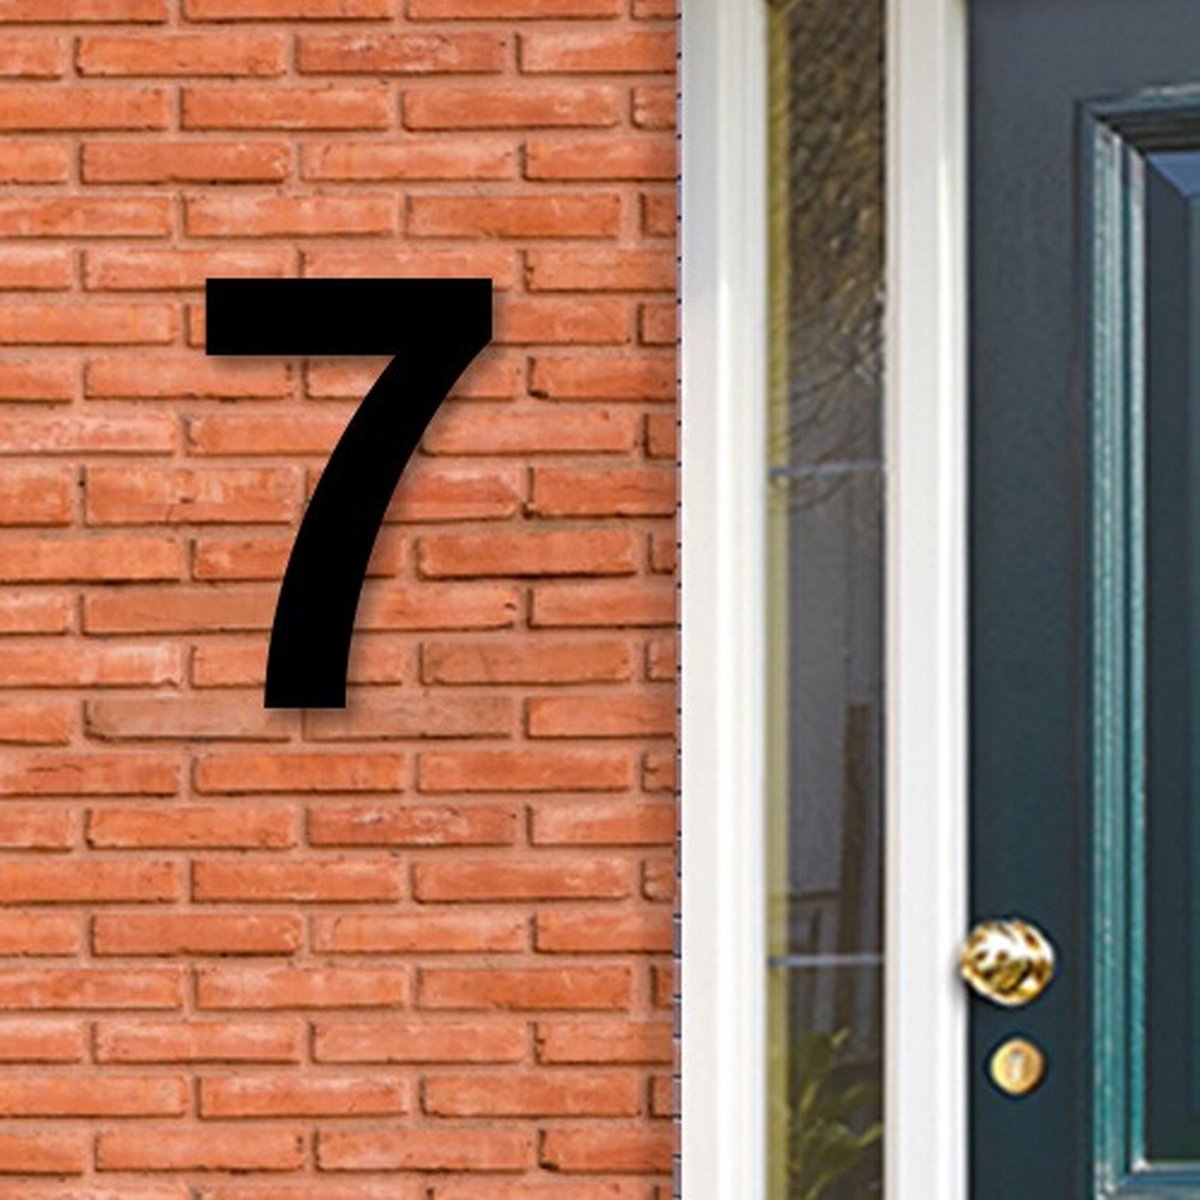 Huisnummer Acryl zwart, cijfer 7, Hoogte 16cm - Huisnummers - Huisnummer zwart - Huisnummer modern - Gratis verzending!